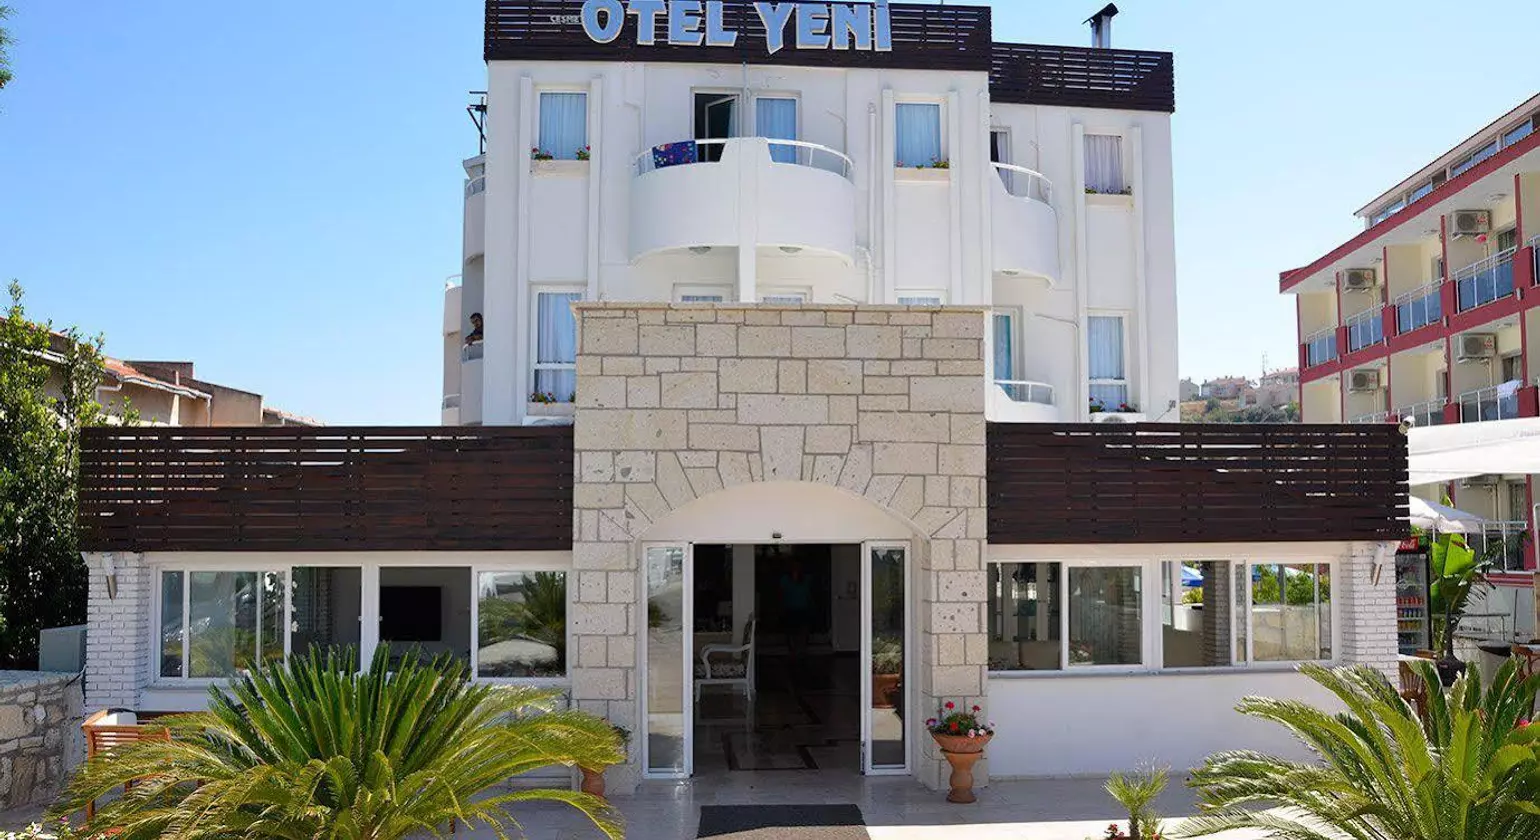 Hotel Yeni